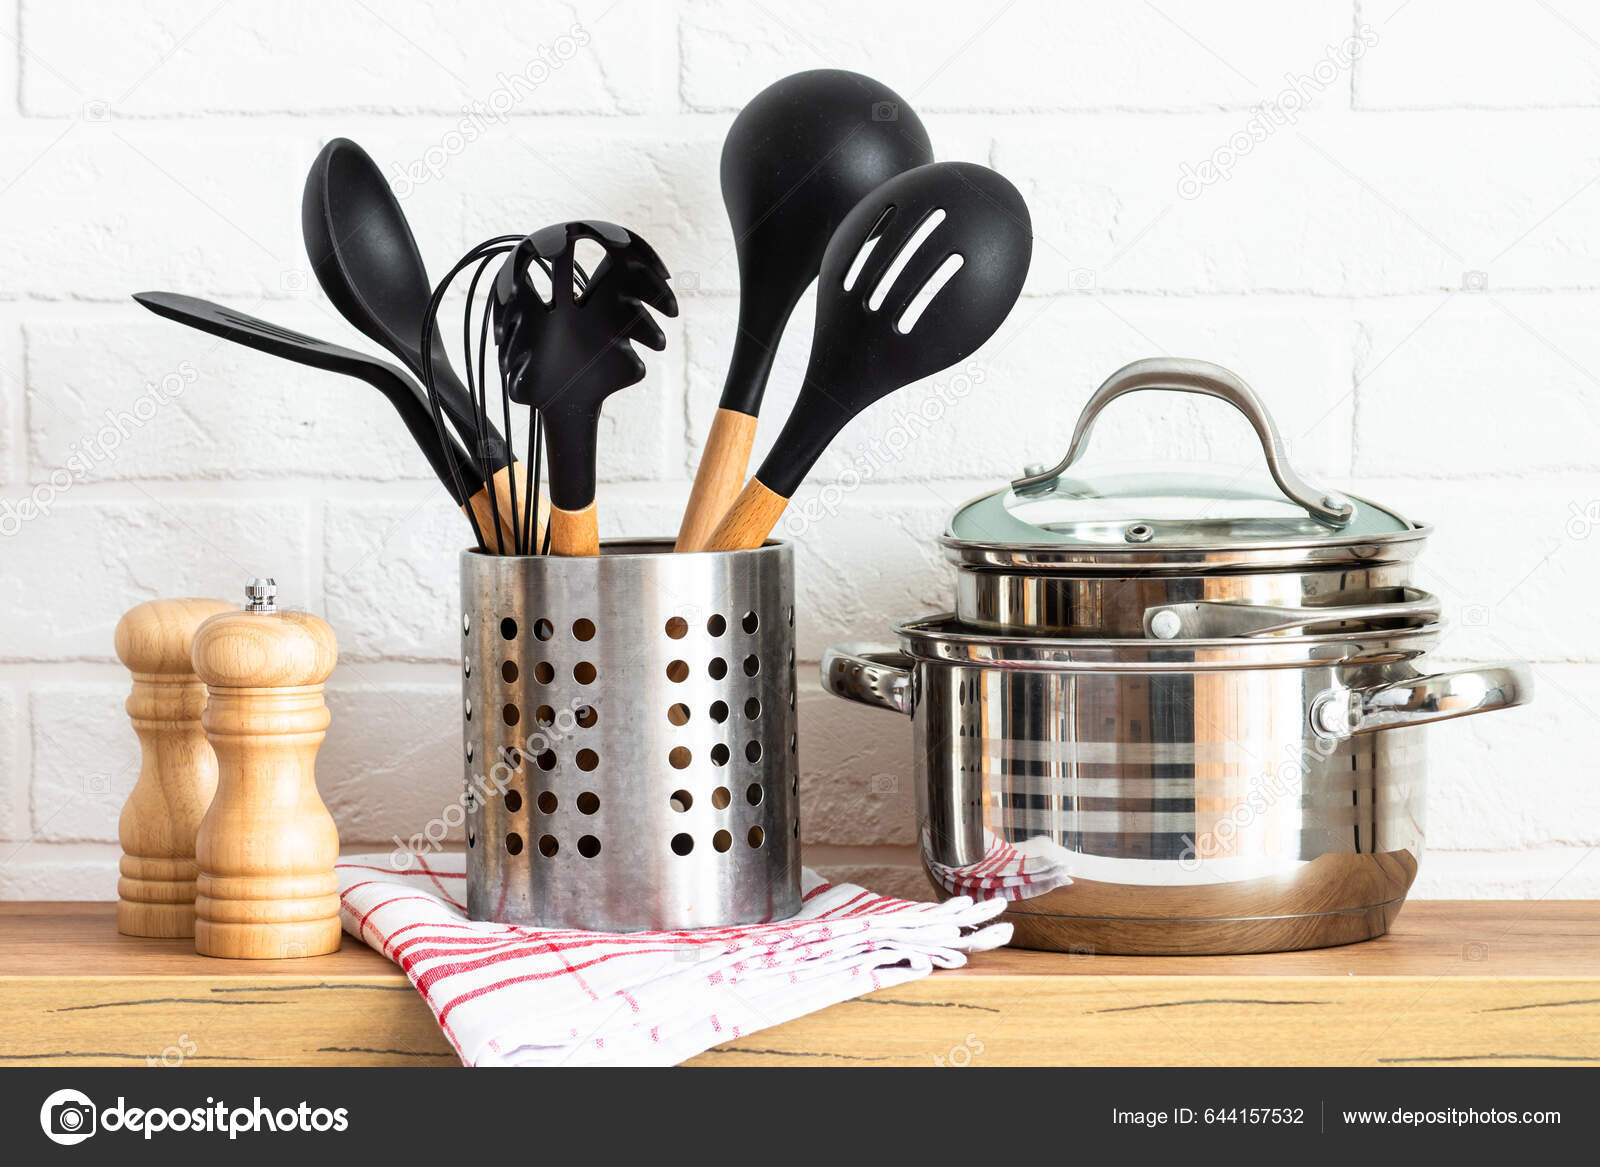 https://st5.depositphotos.com/1558912/64415/i/1600/depositphotos_644157532-stock-photo-modern-kitchen-wooden-table-kitchen.jpg